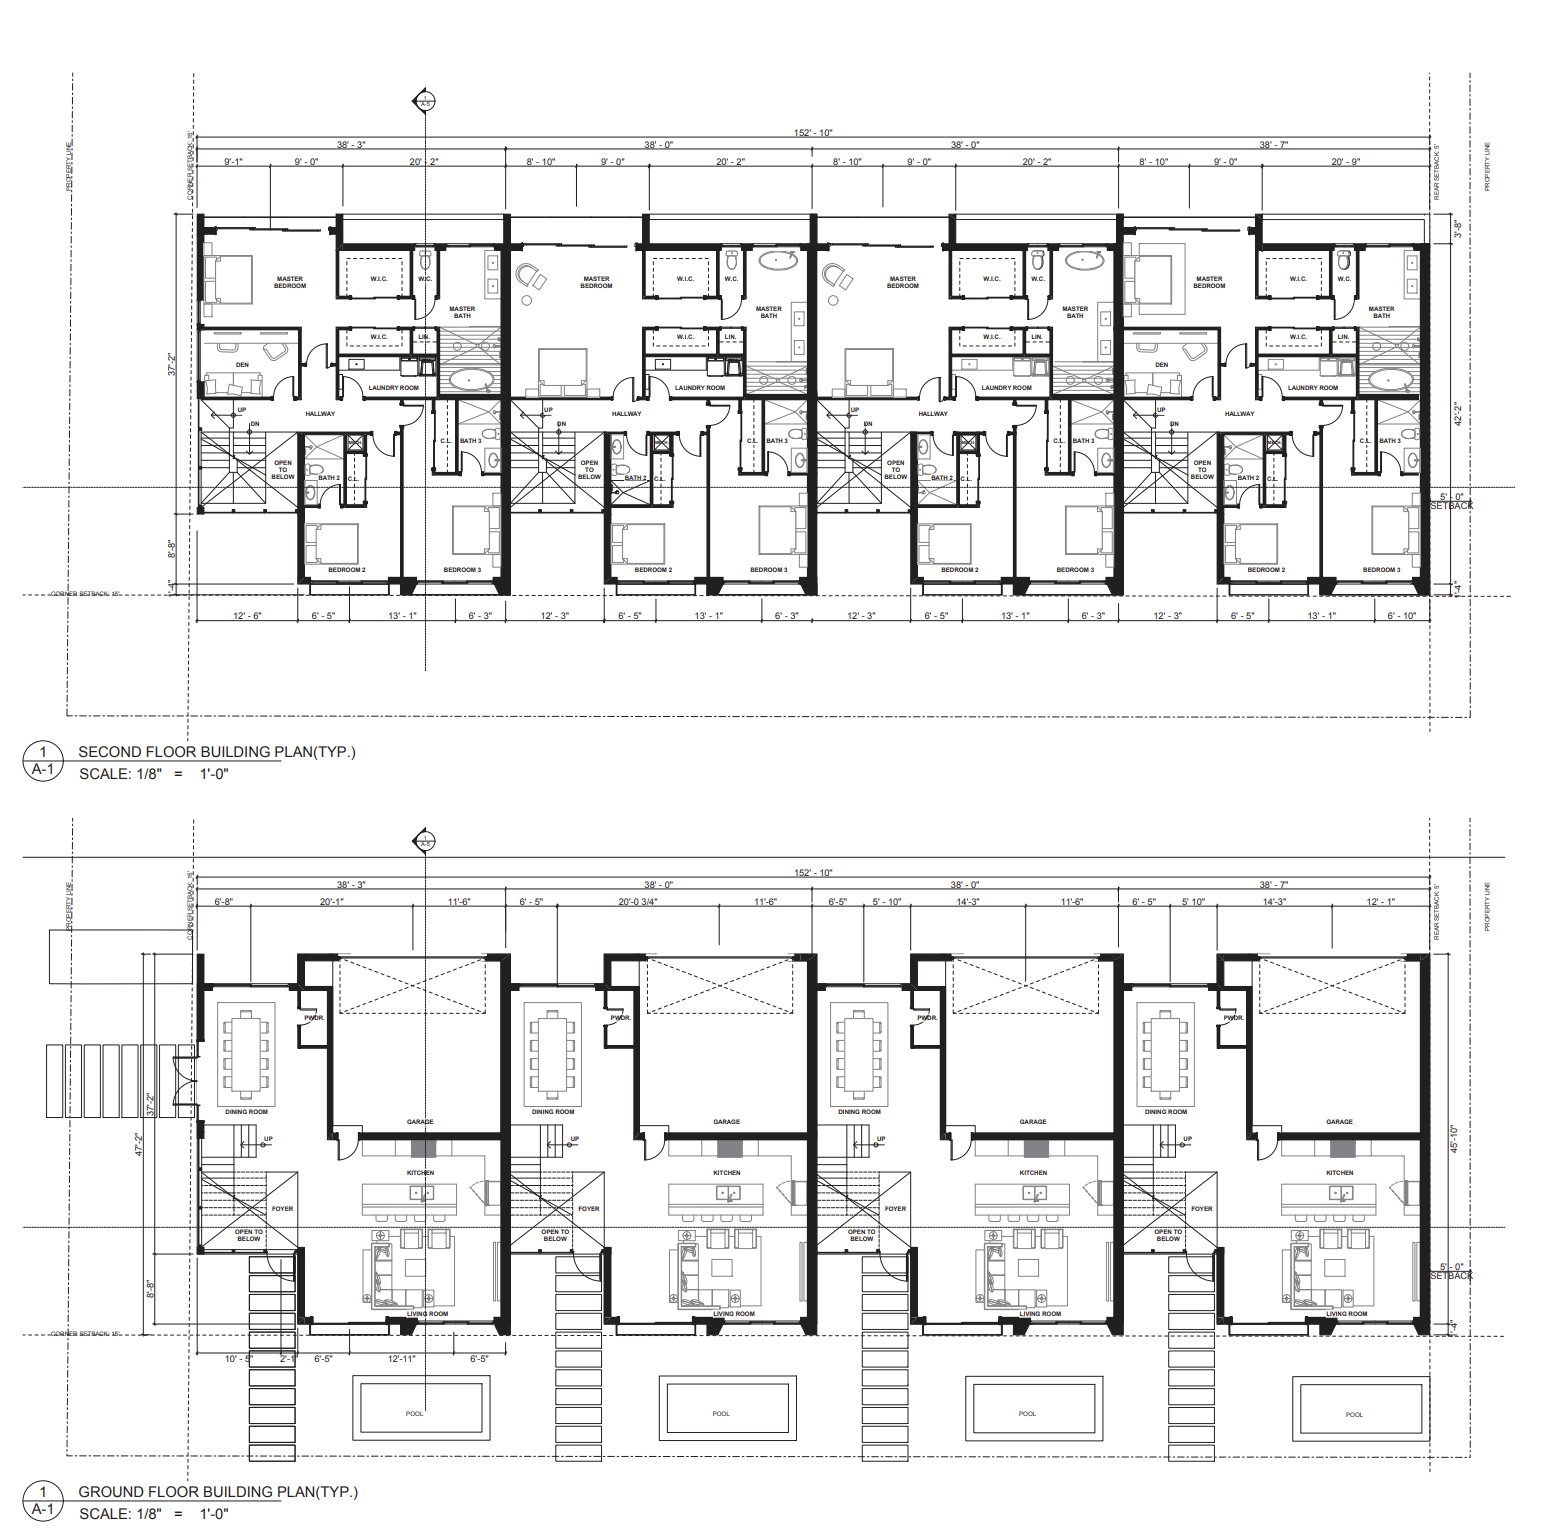 Floor Plans at Esmonda Townhomes; Courtesy of FieldAgency Architecture.